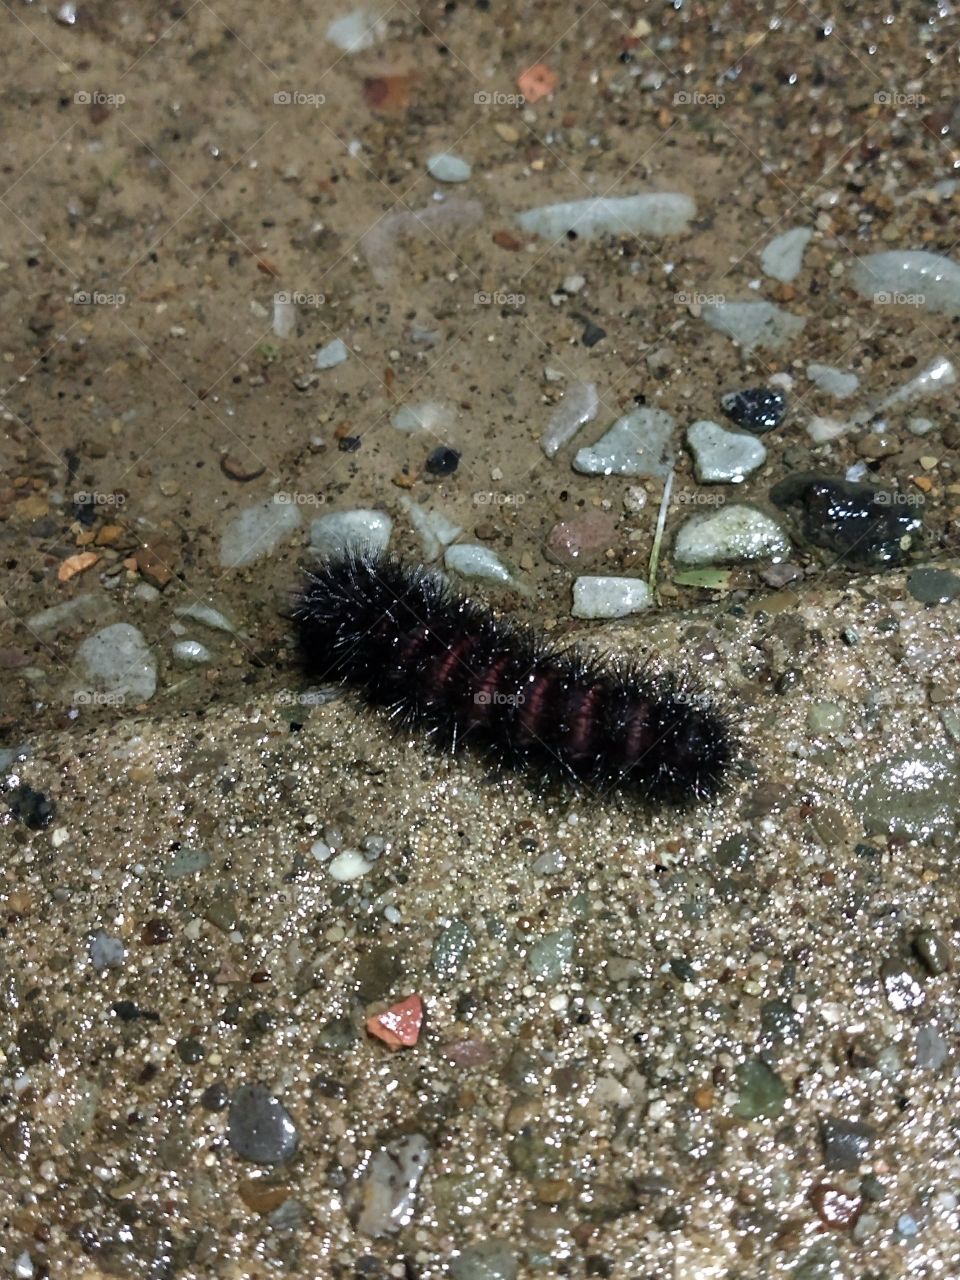 fuzzy caterpillar crawling in the rain